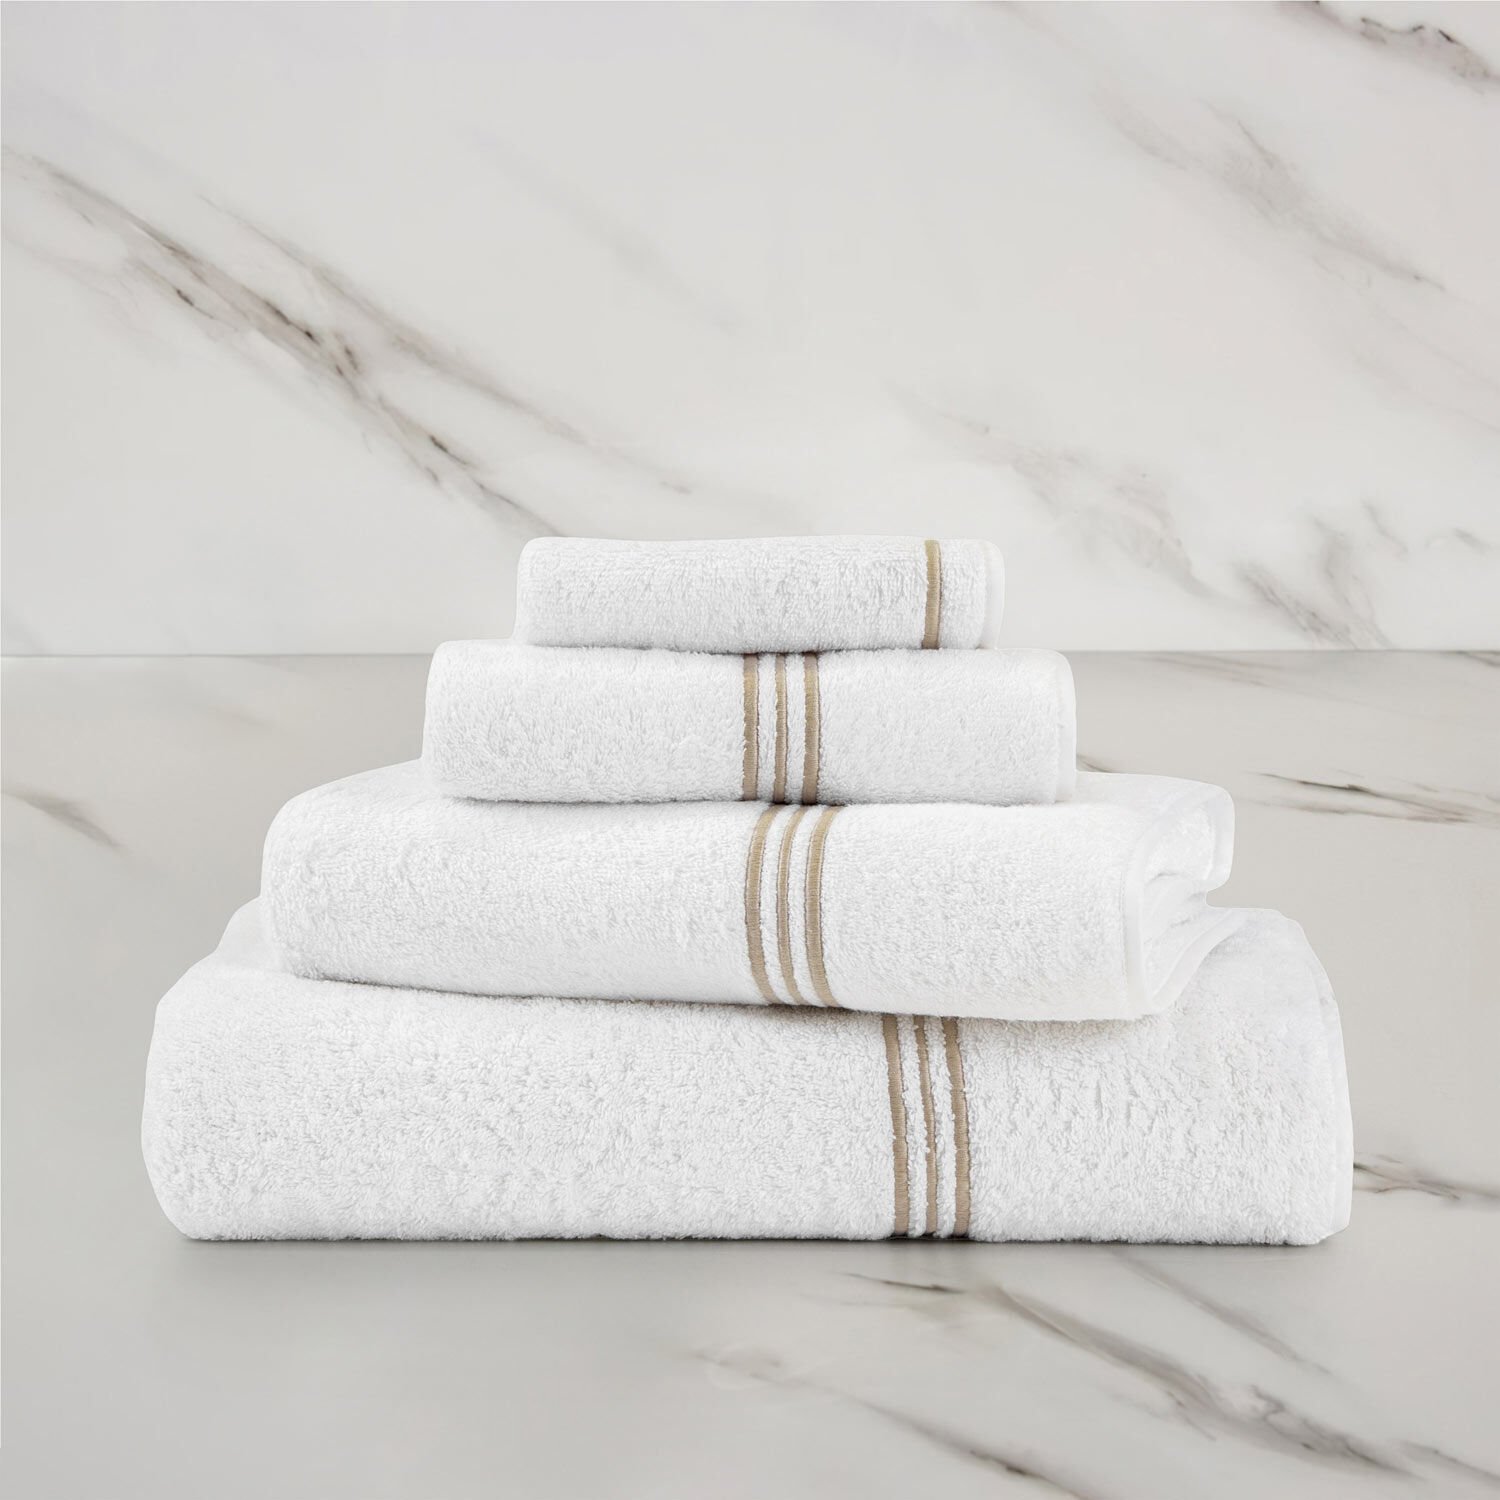 NEW Frette LUX 6 PC SET SAVONA Bath Sheet Bath Hand Towels SOFTEST Towel GREY 